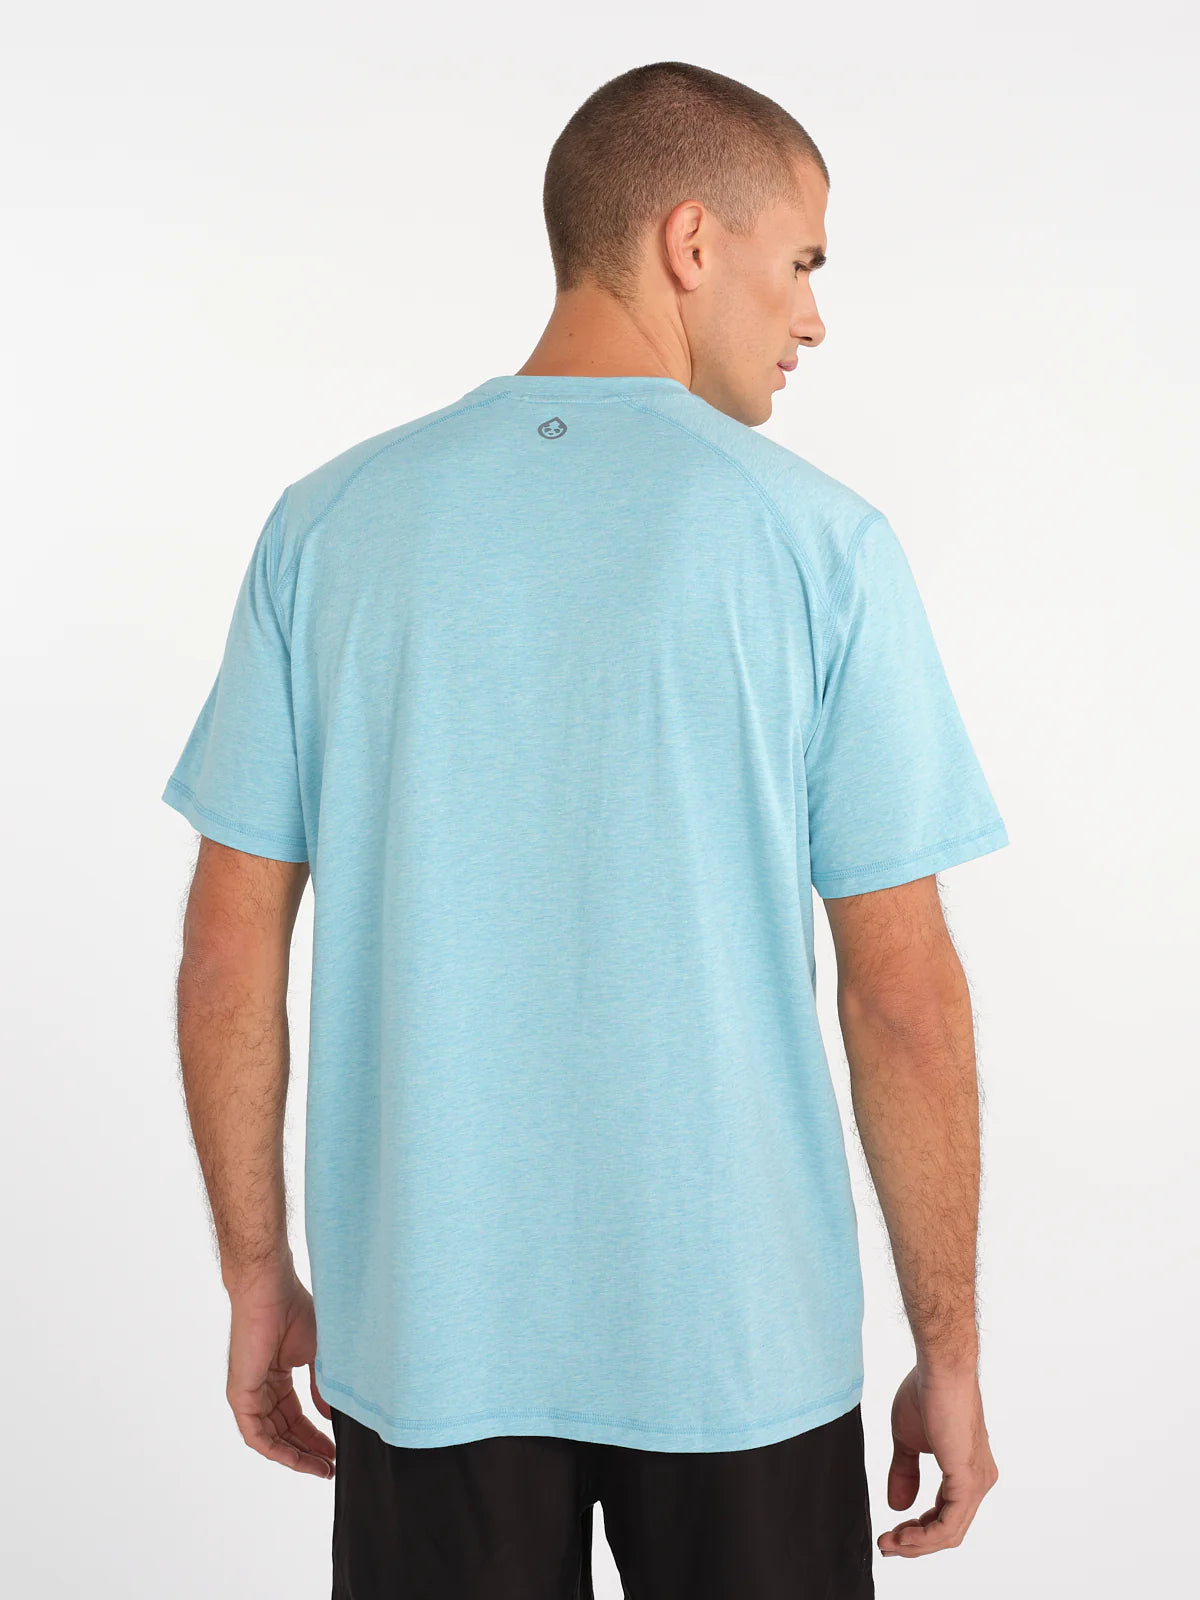 Tasc Carrollton Fitness T-Shirt in Radiant Blue Heather - NEW!